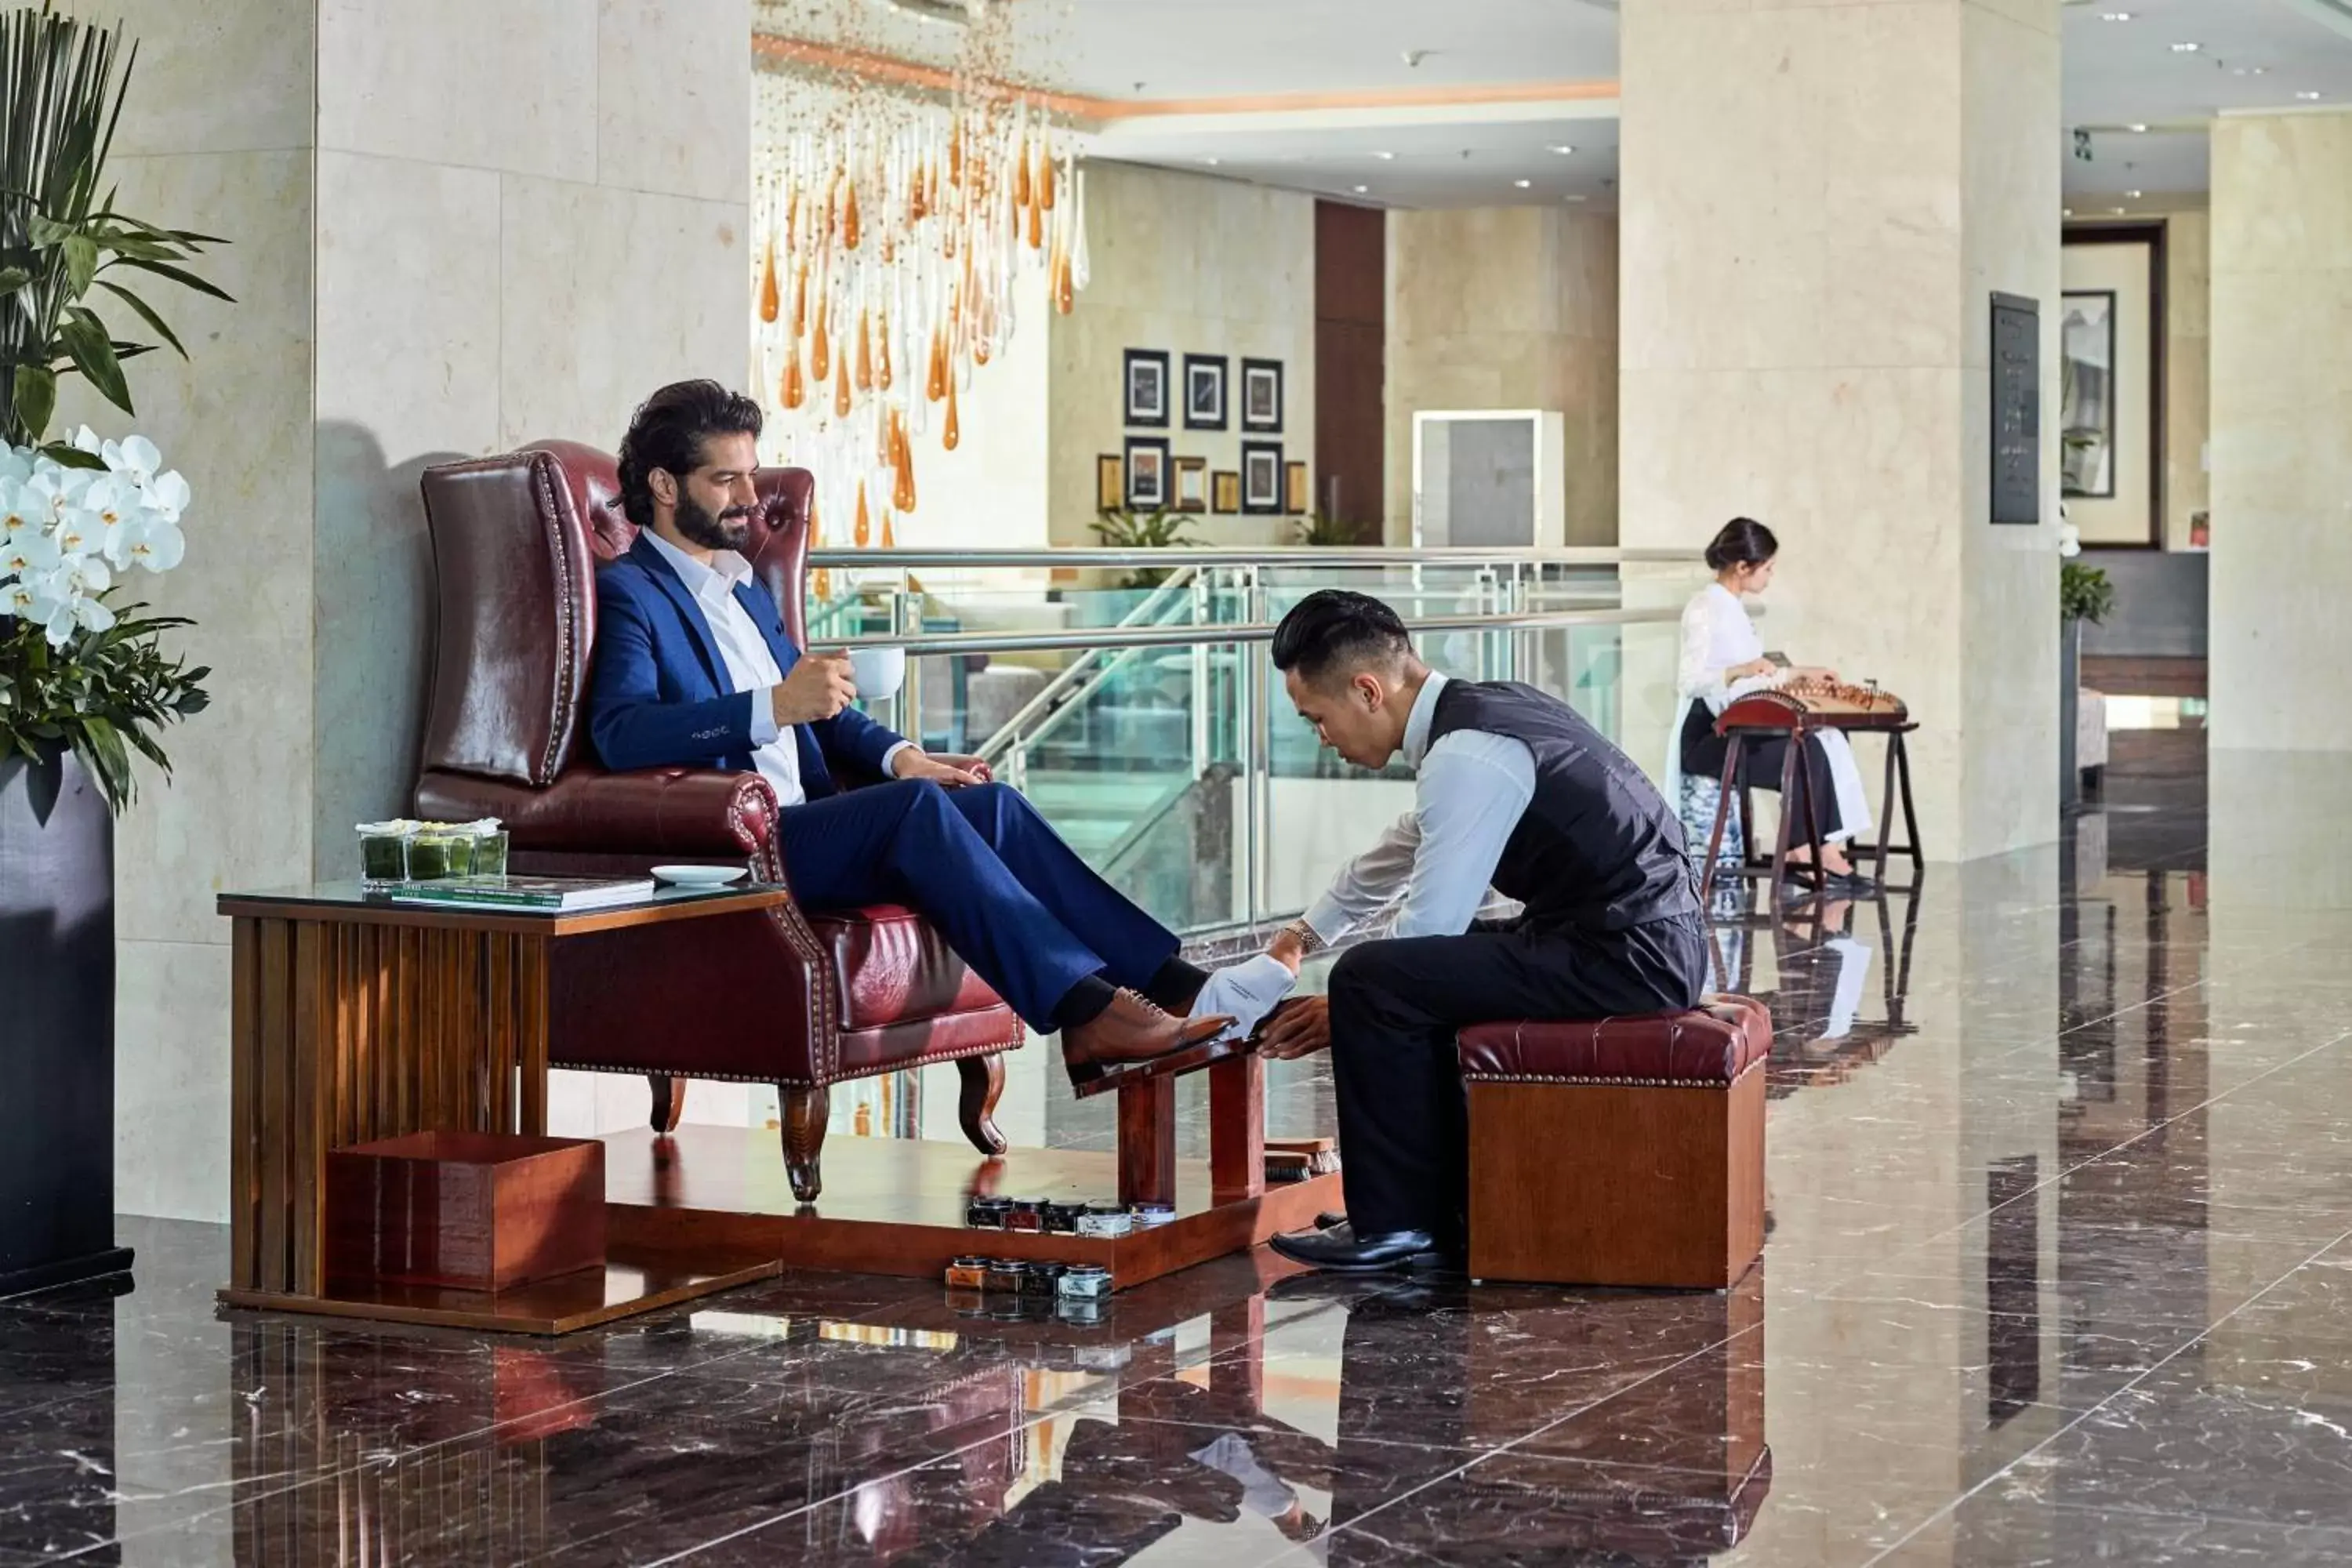 Other in JW Marriott Hotel Hanoi